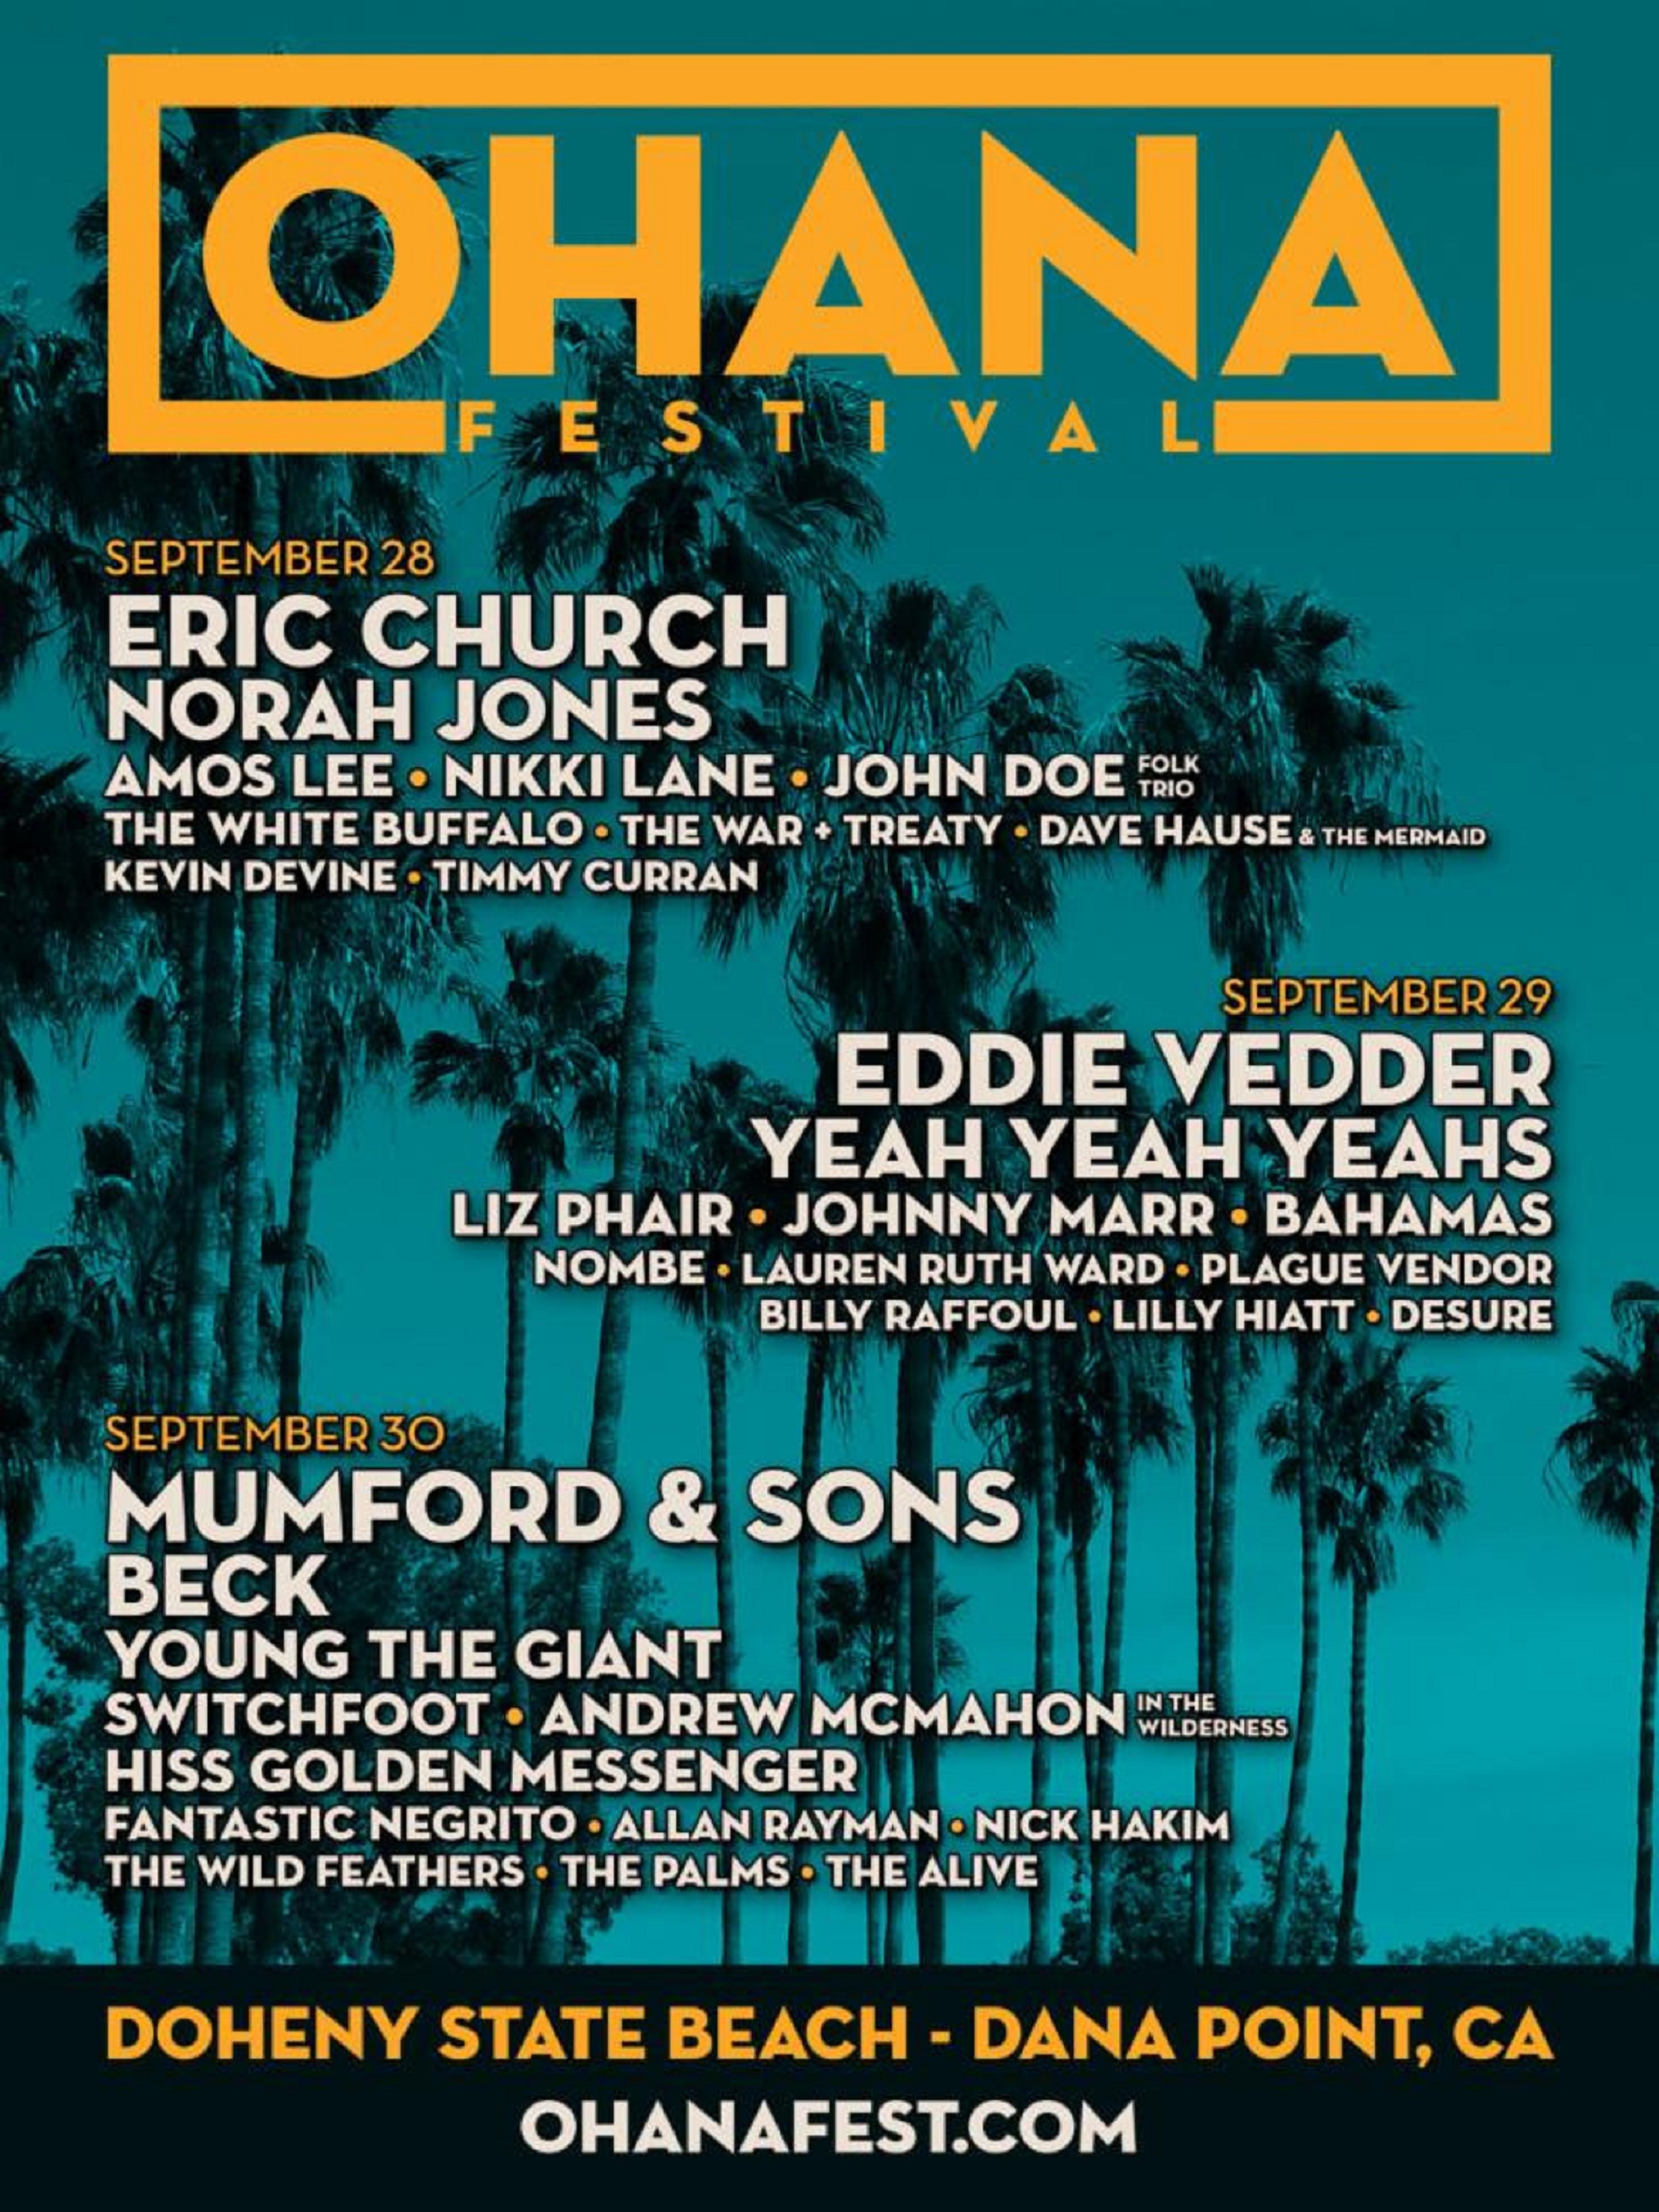 OHANA FESTIVAL 2018 LineUp Includes Eric Church, Eddie Vedder, Mumford